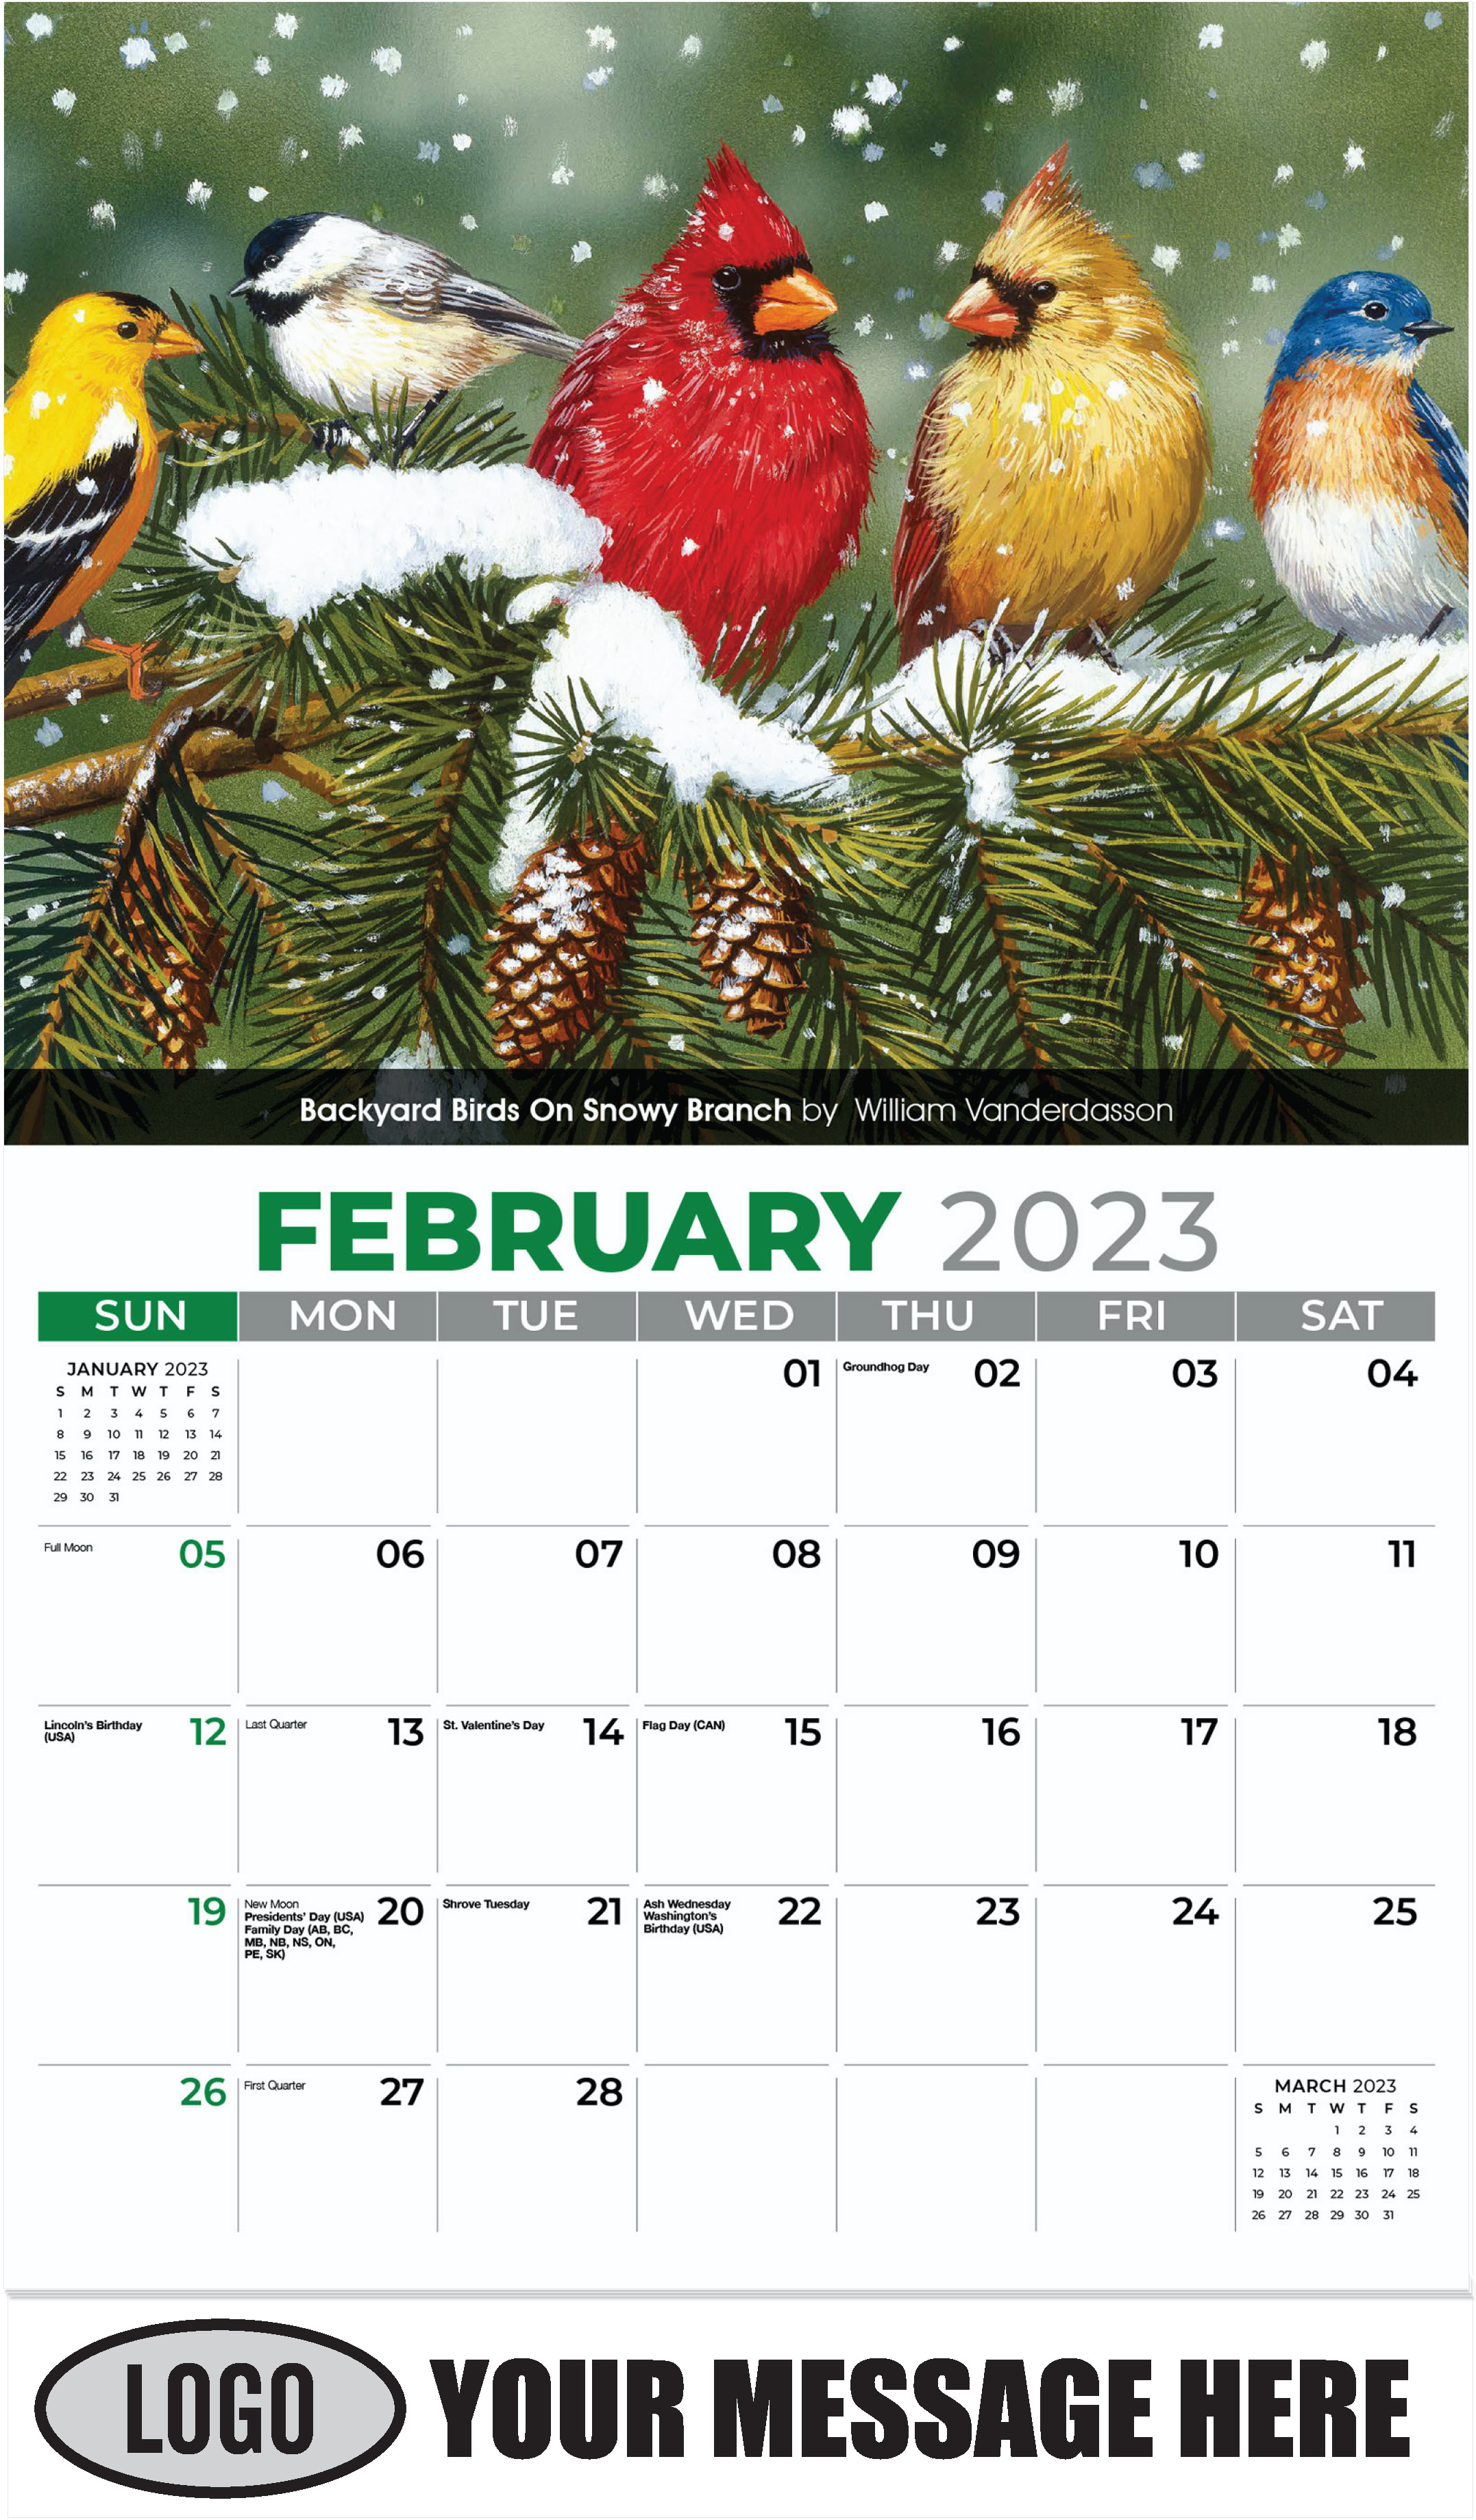 Backyard Birds On Snowy Branch by William
Vanderdasson - February - Garden Birds 2023 Promotional Calendar